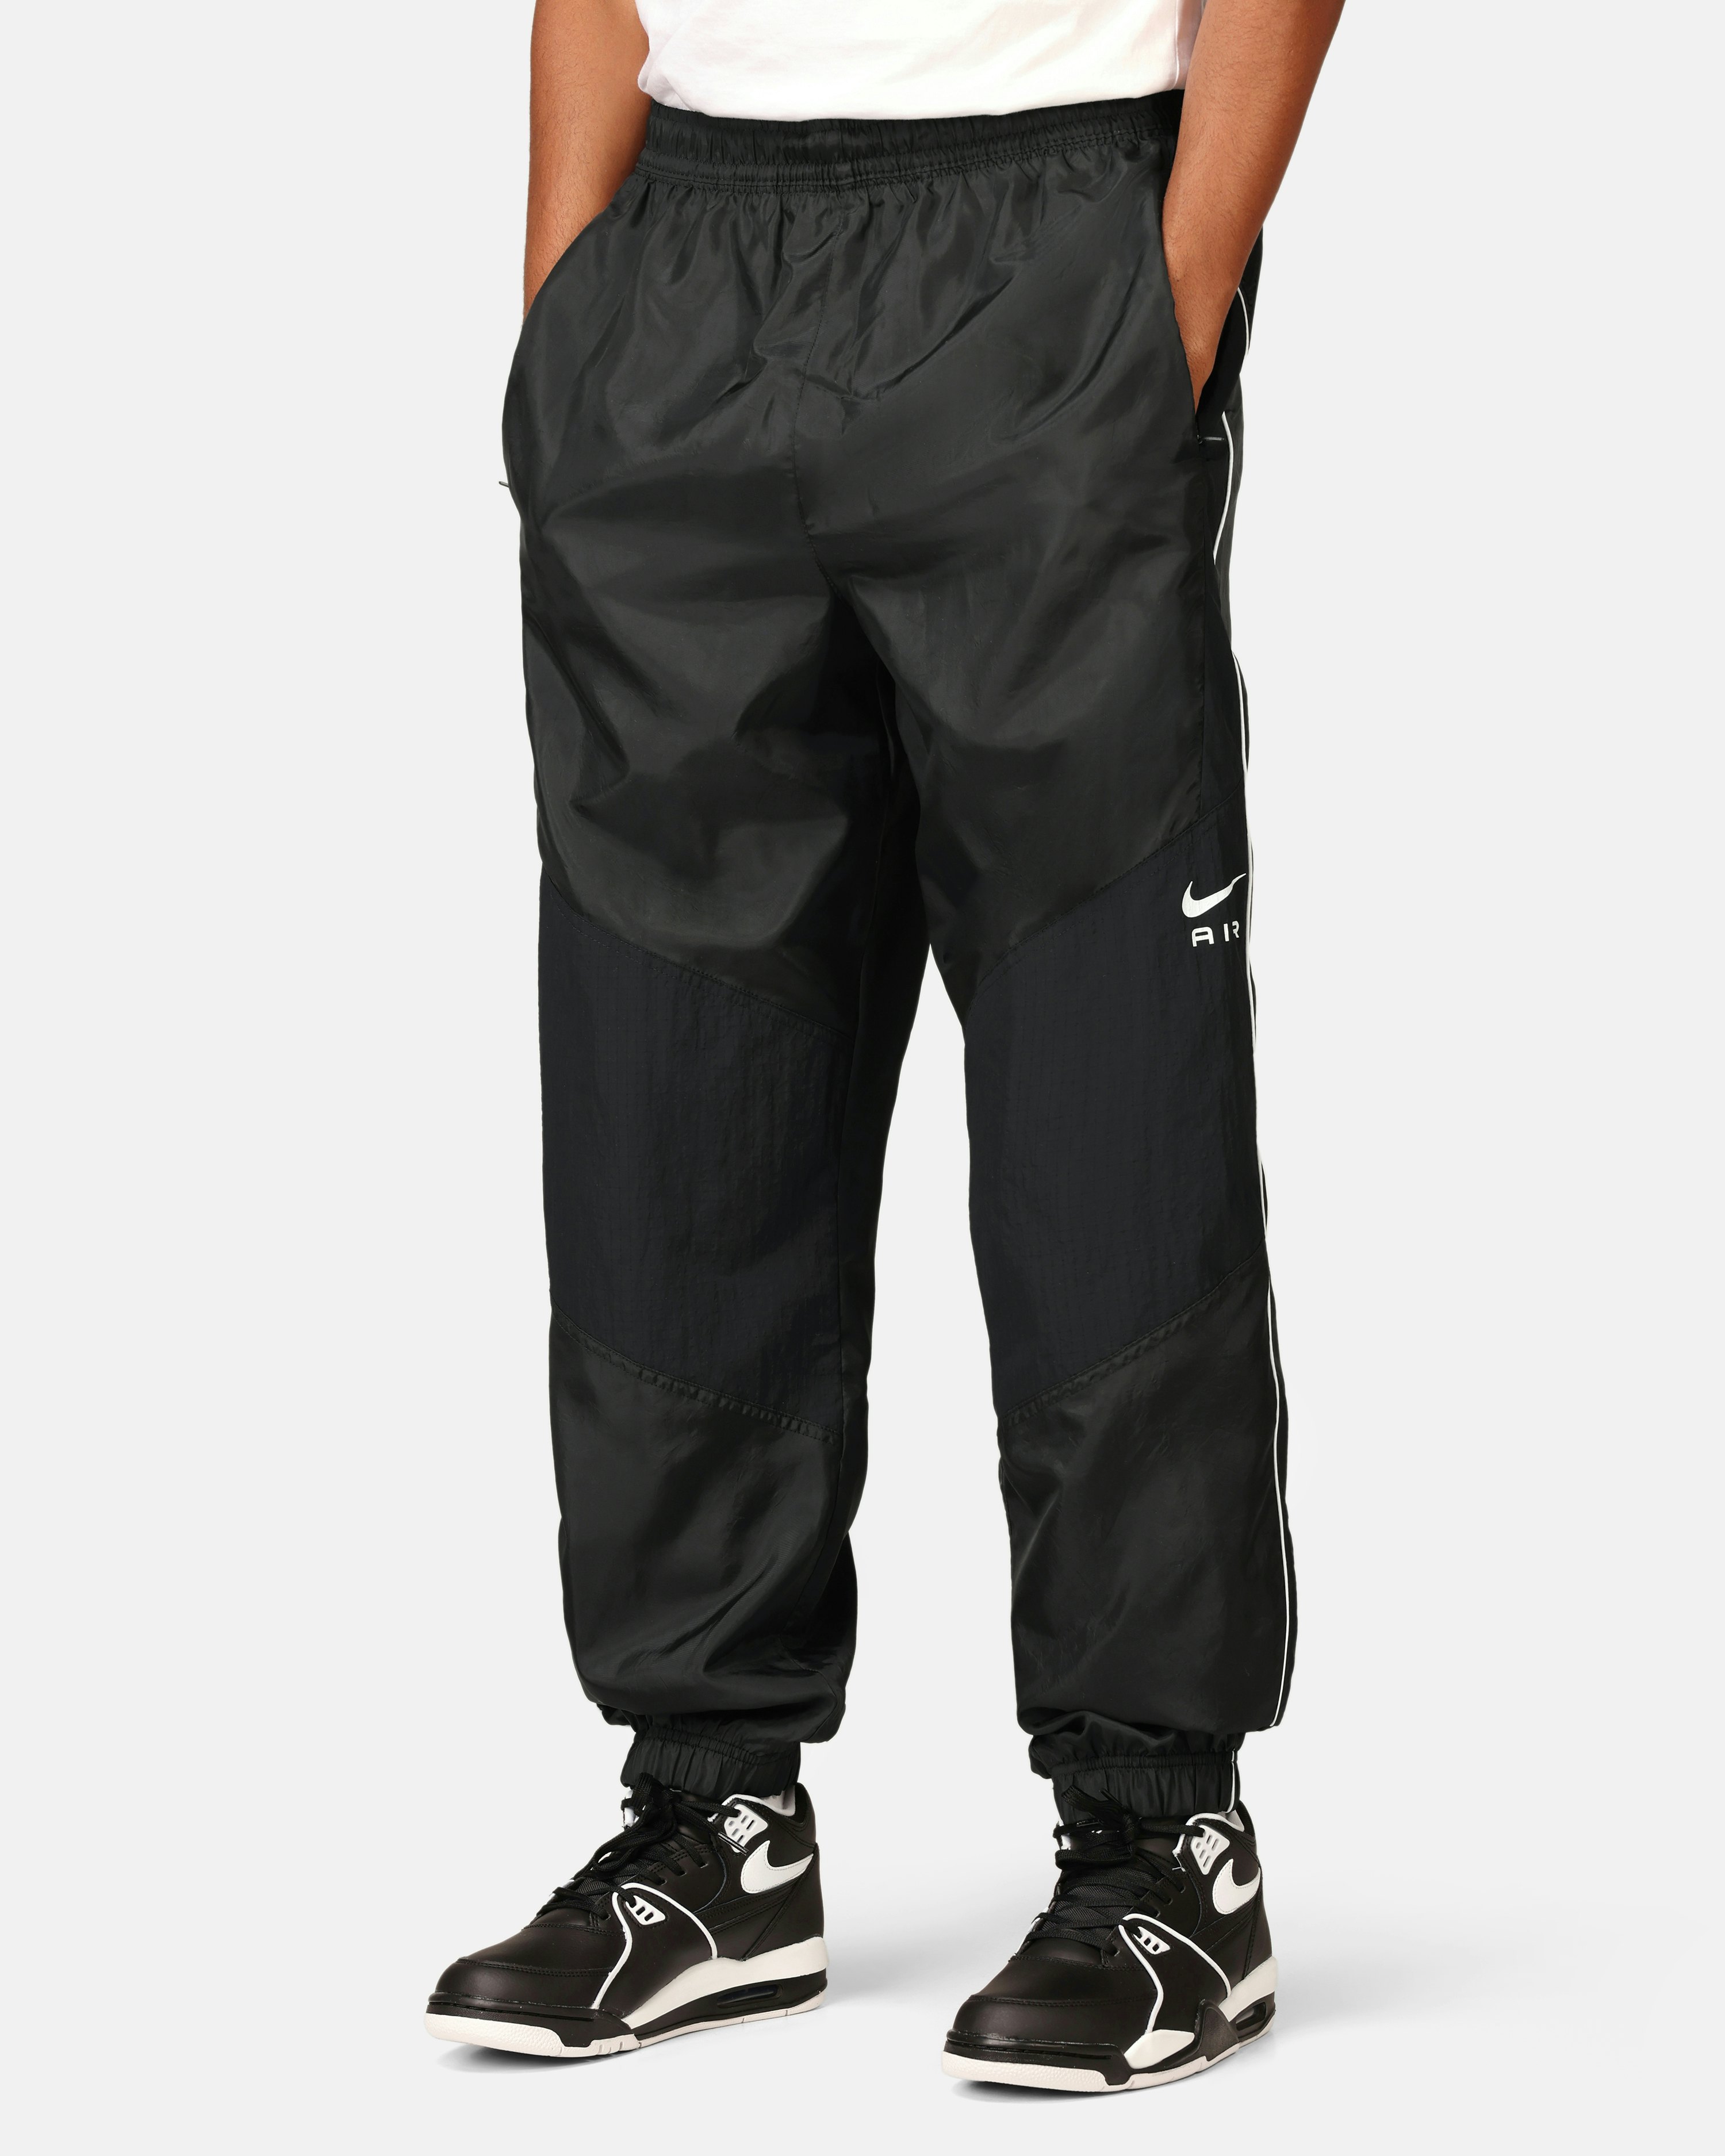 Nike Black Track Pants | Men | Junkyard